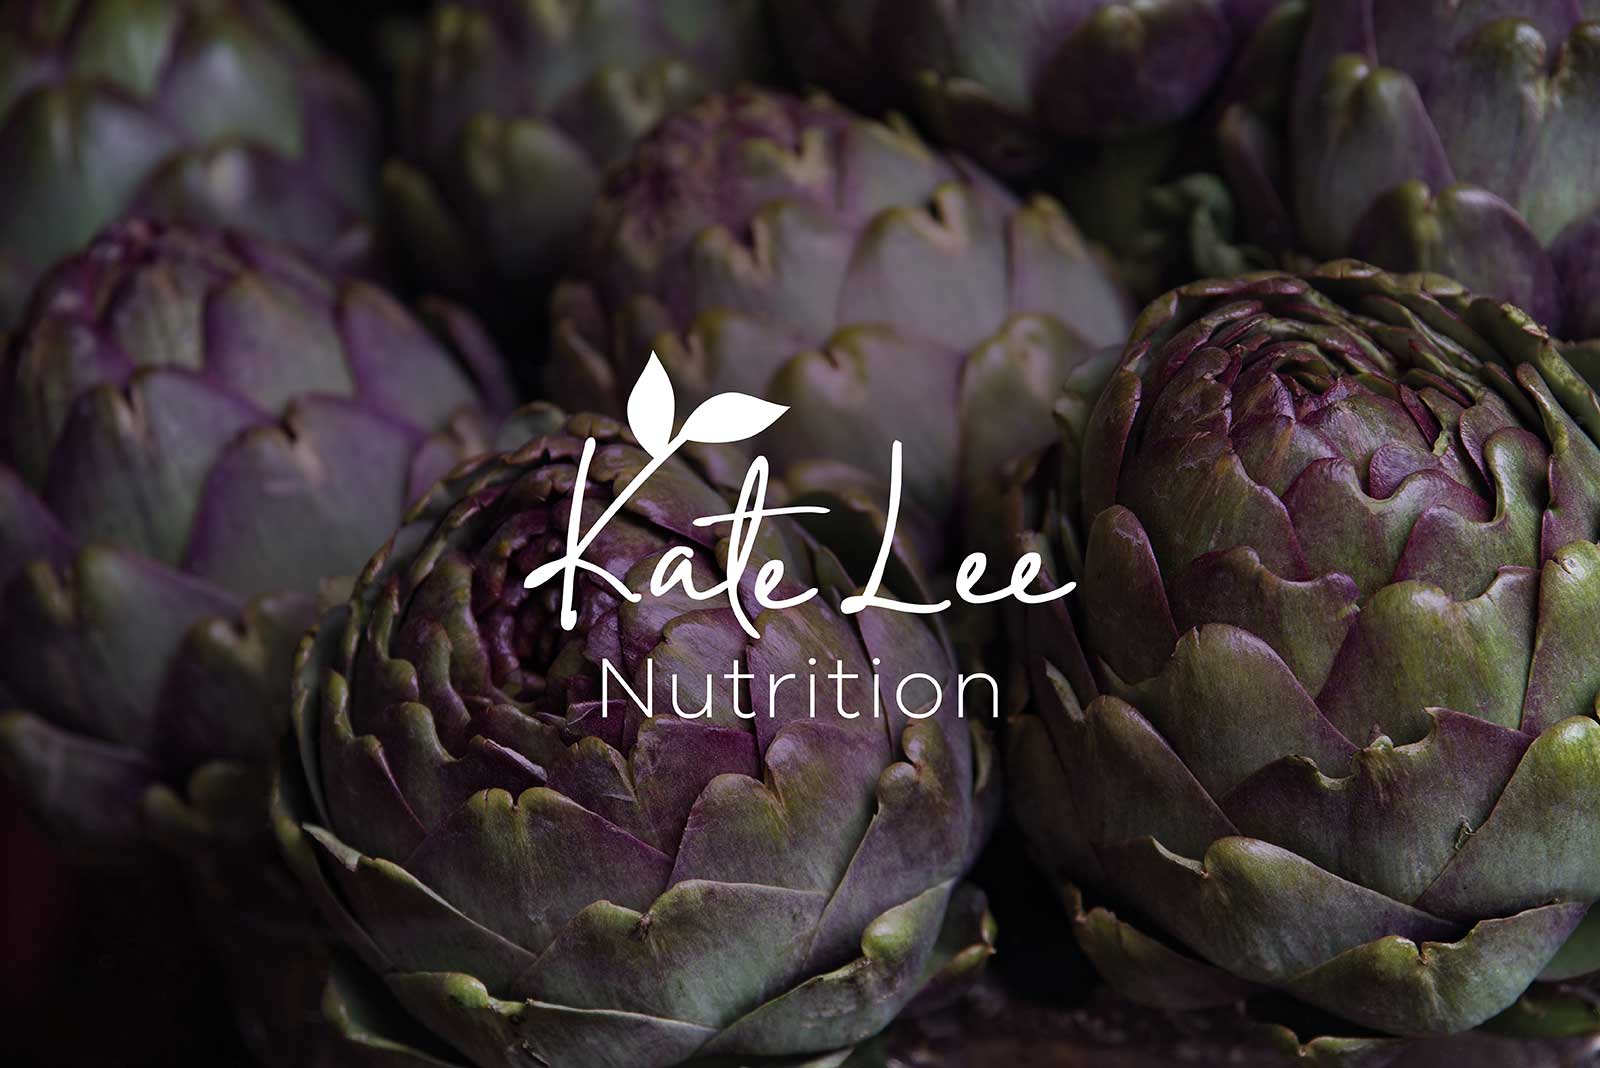 Natural Nutrition Branding